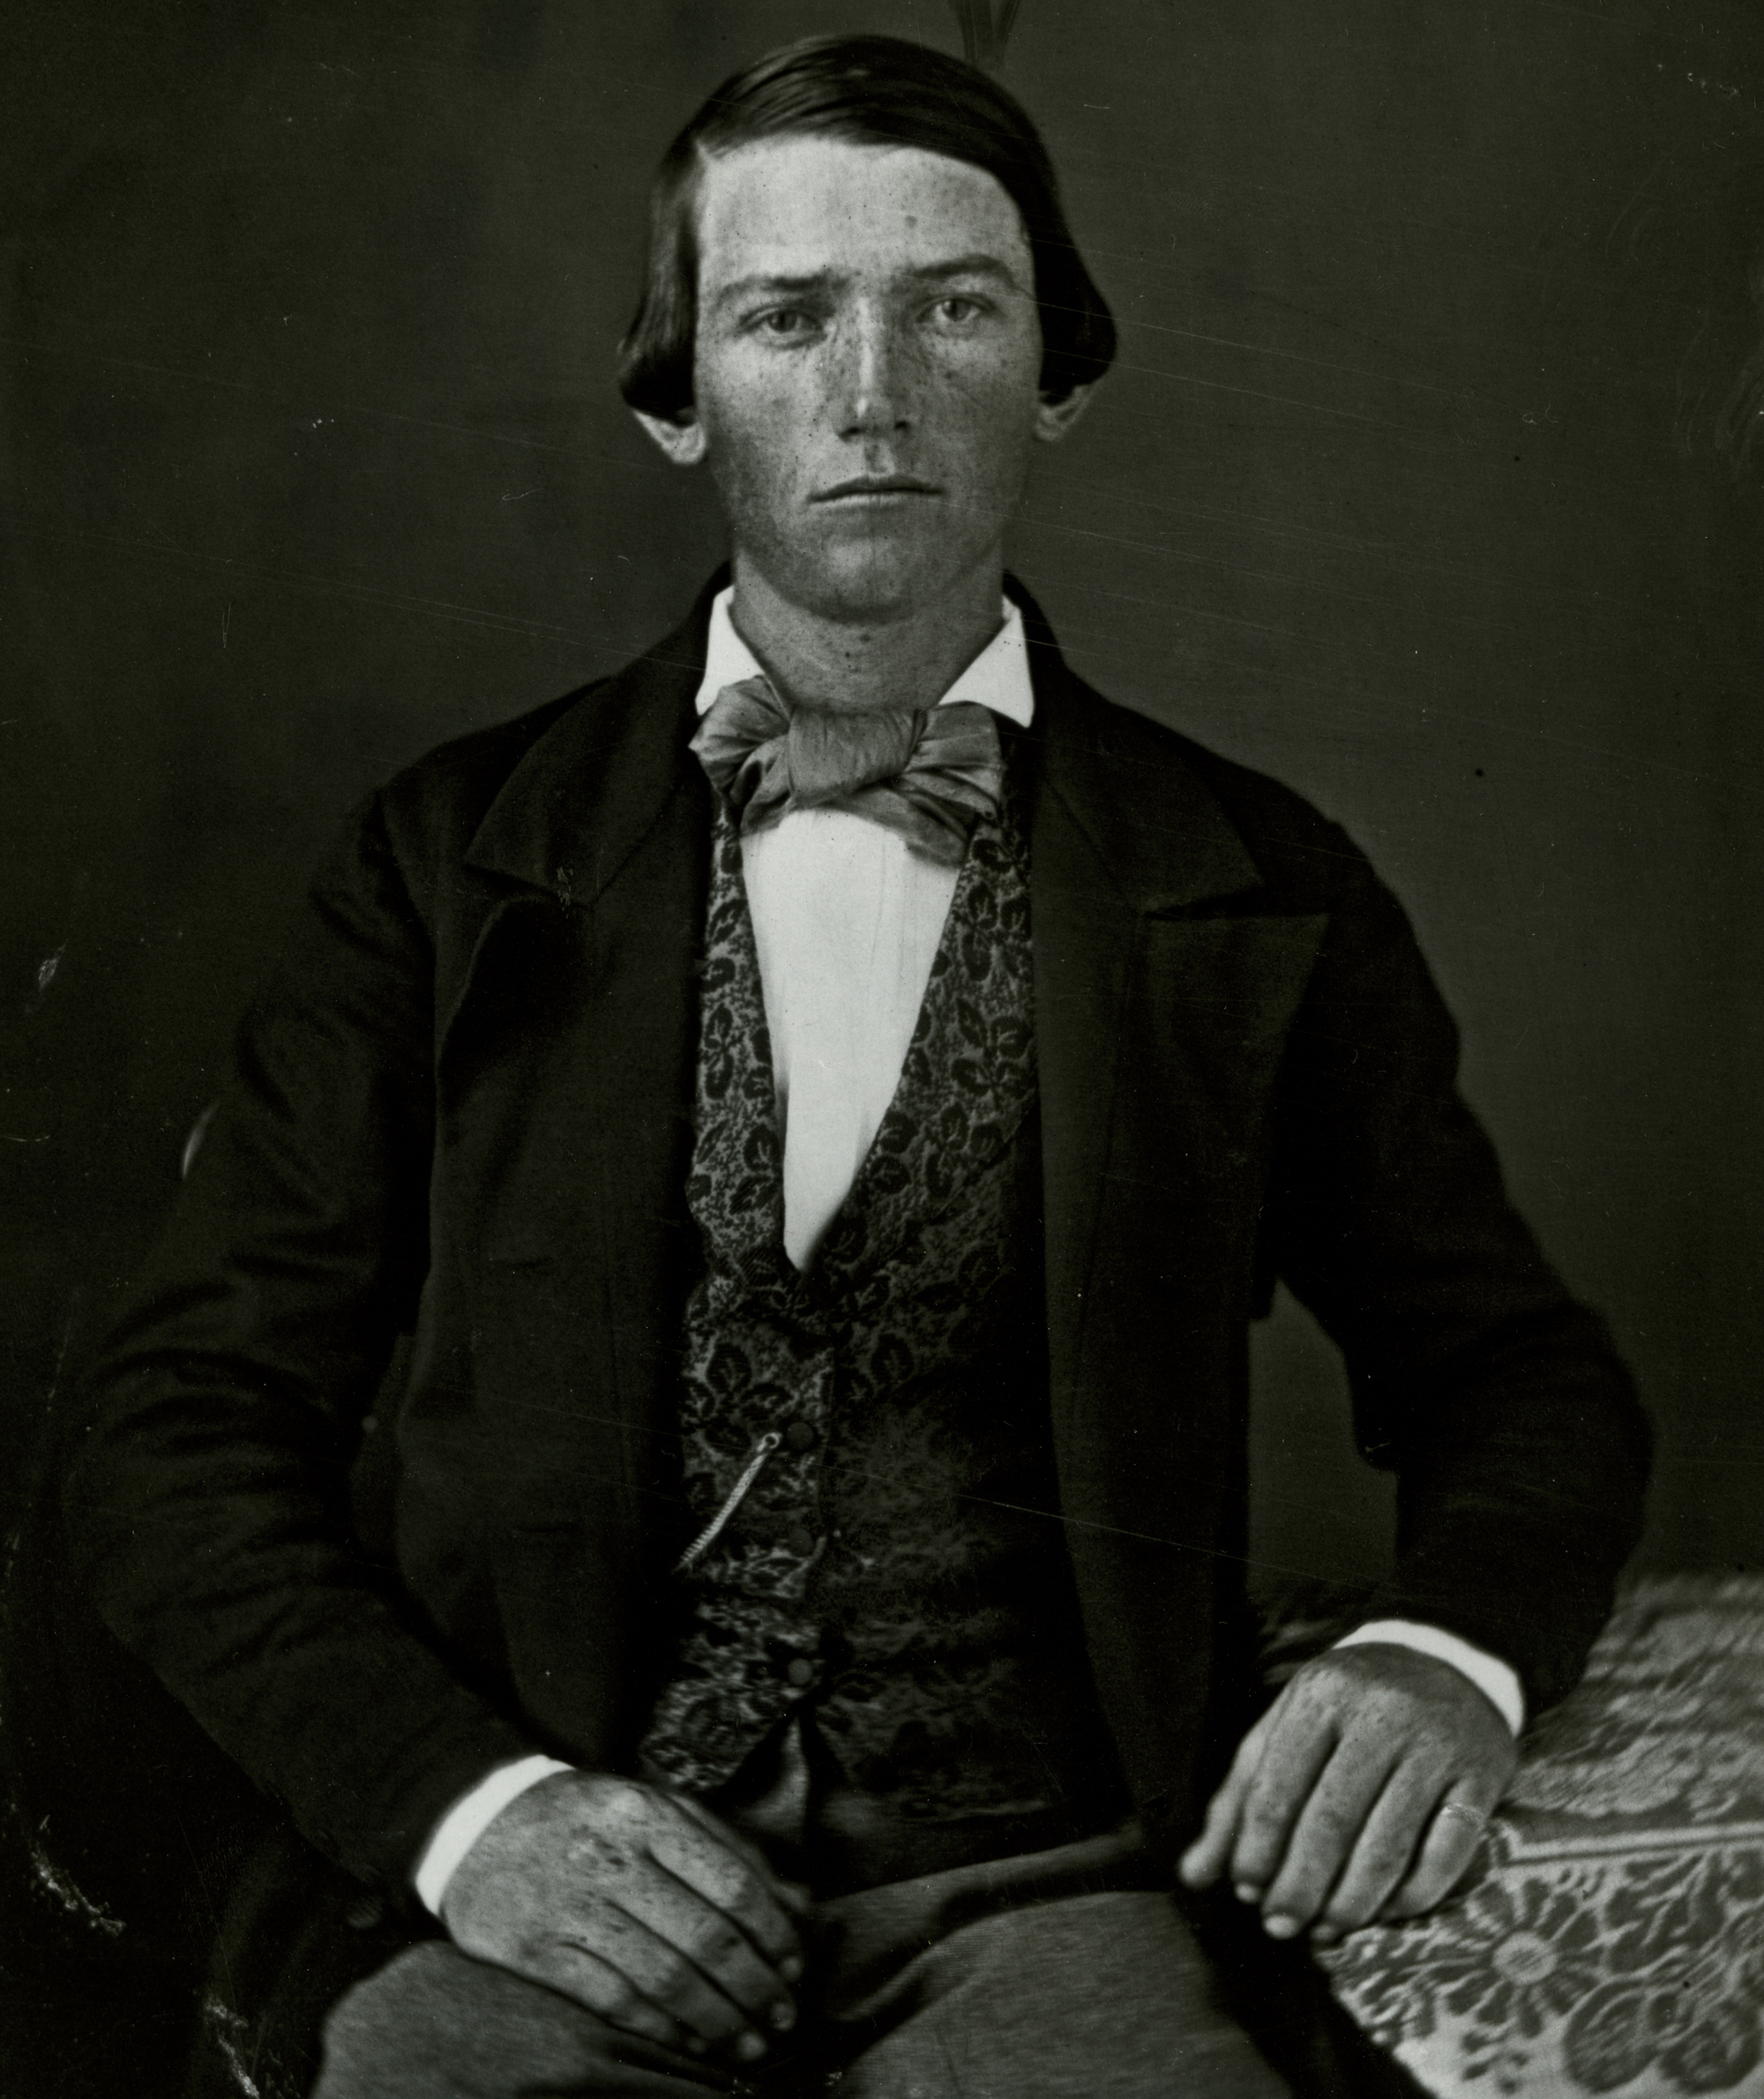 John S. Mosby portrait